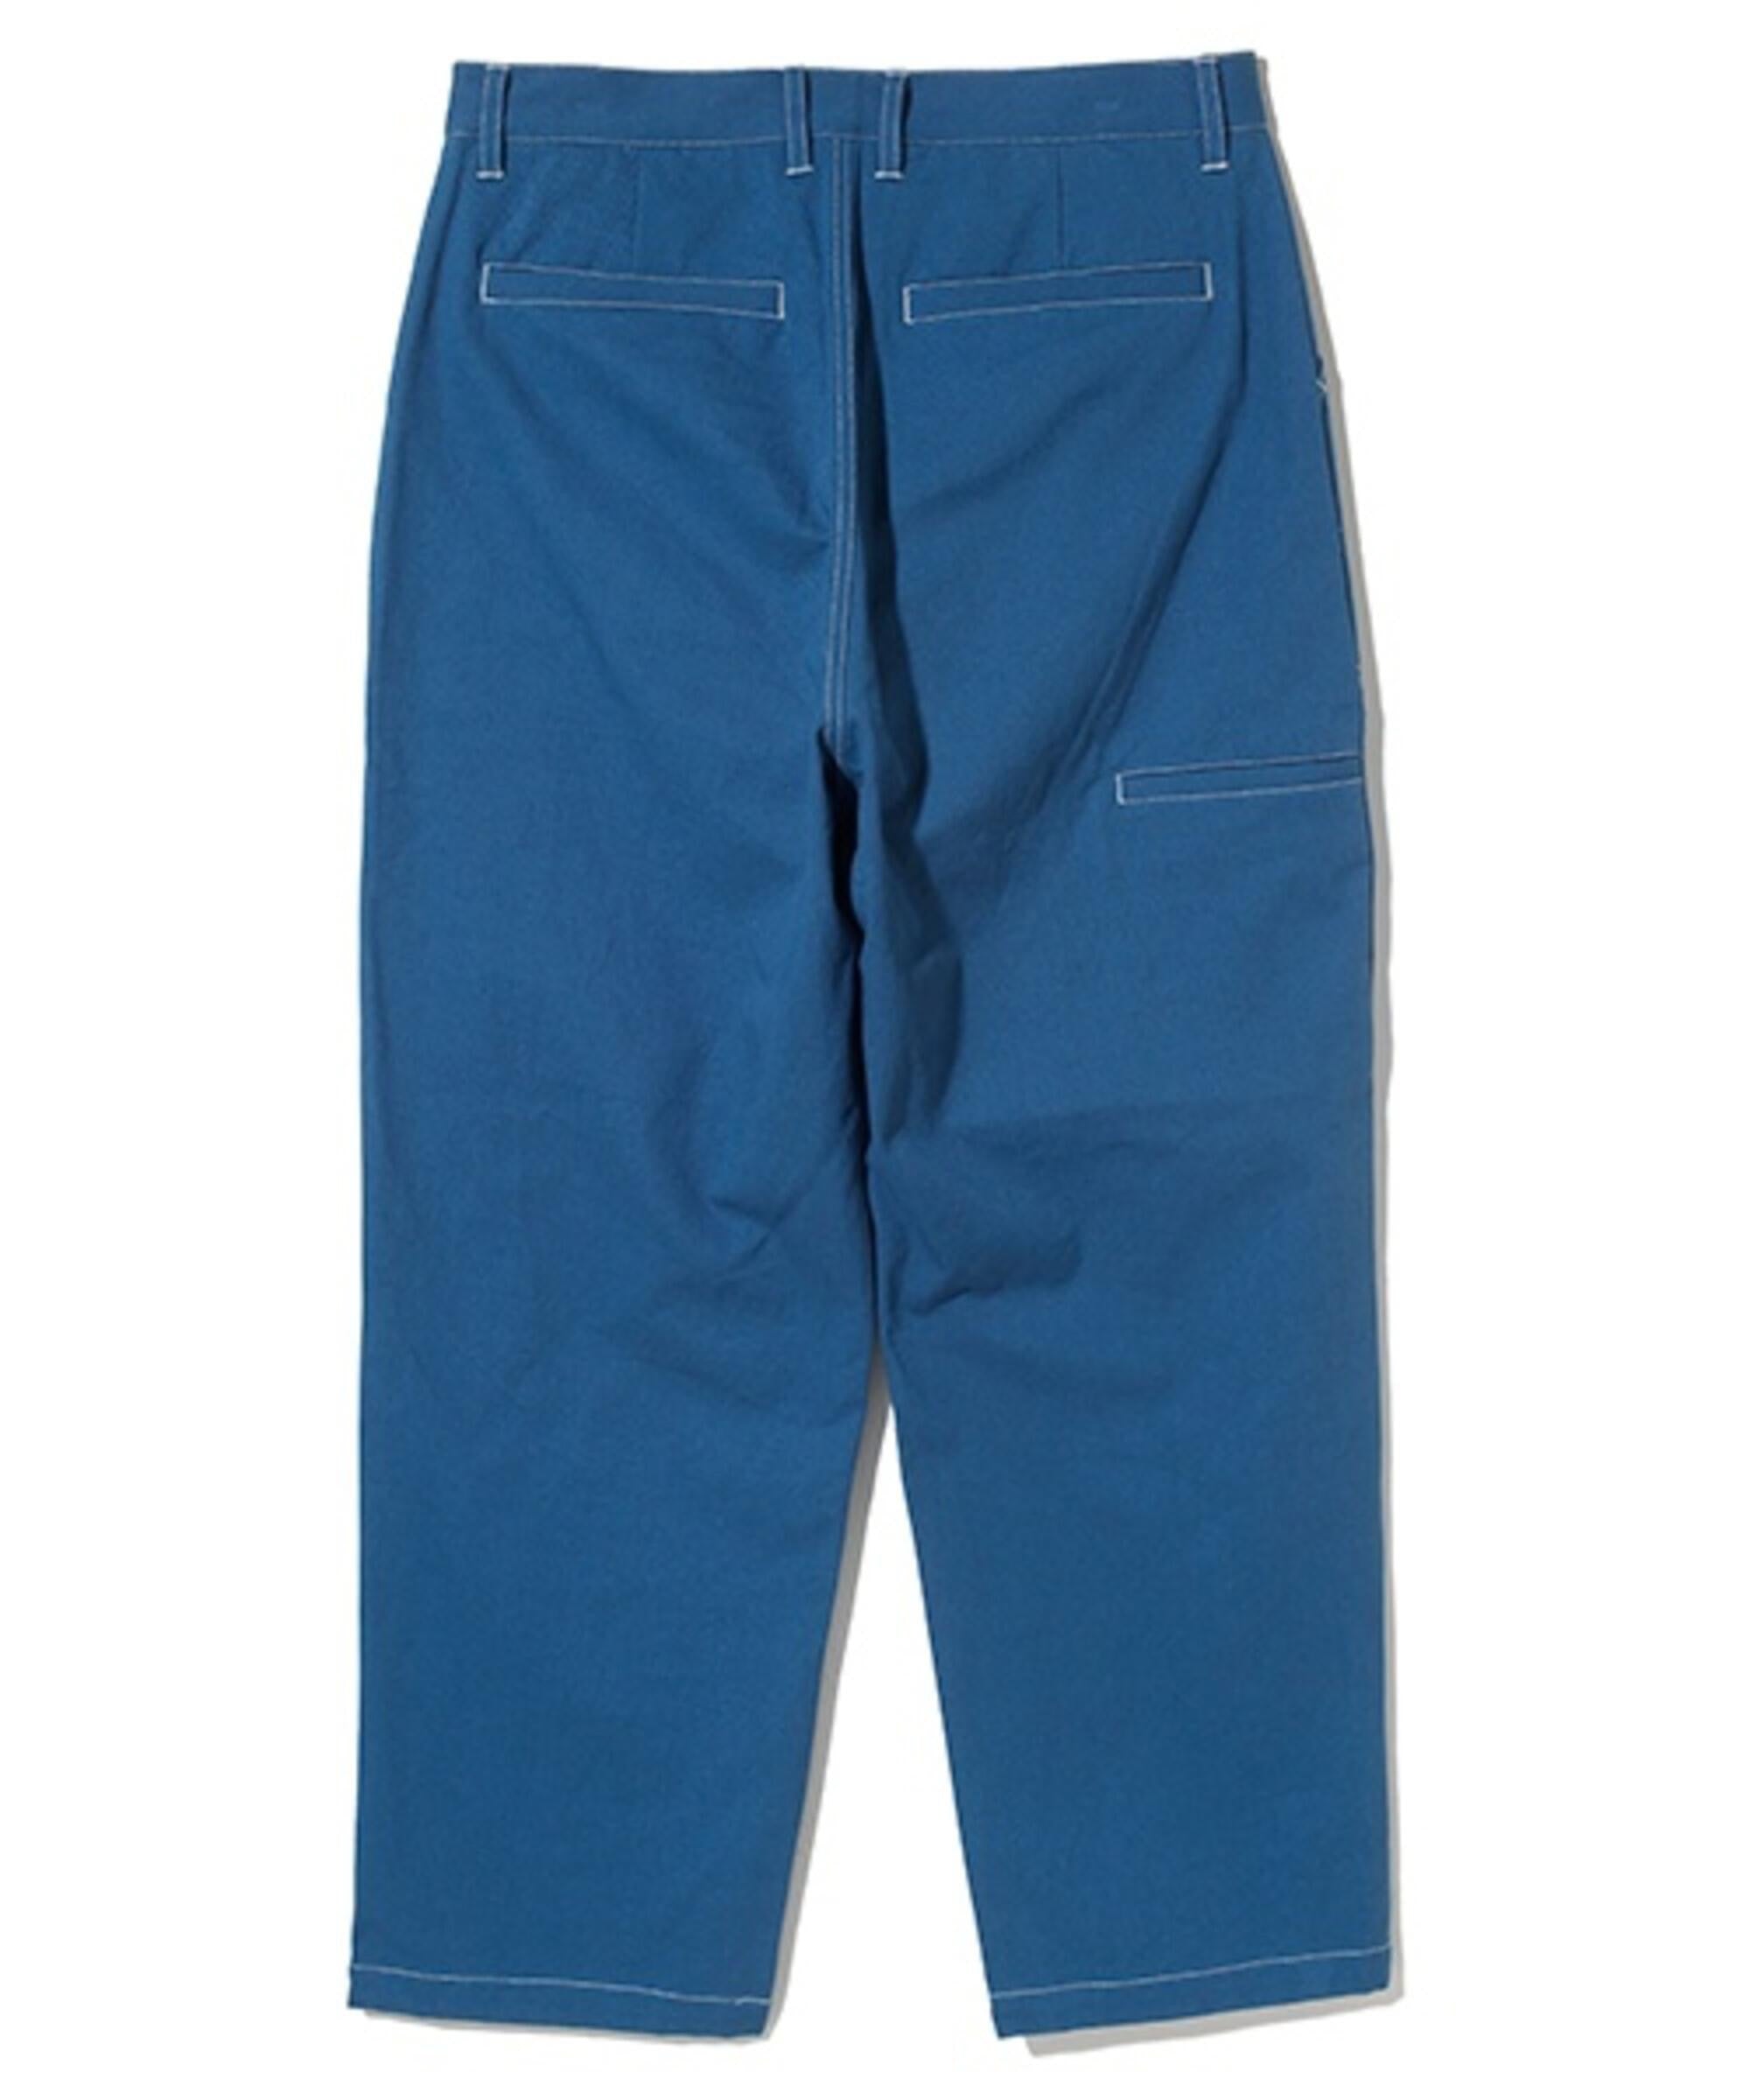 XLarge Stitched Baker Work Pants - Blue